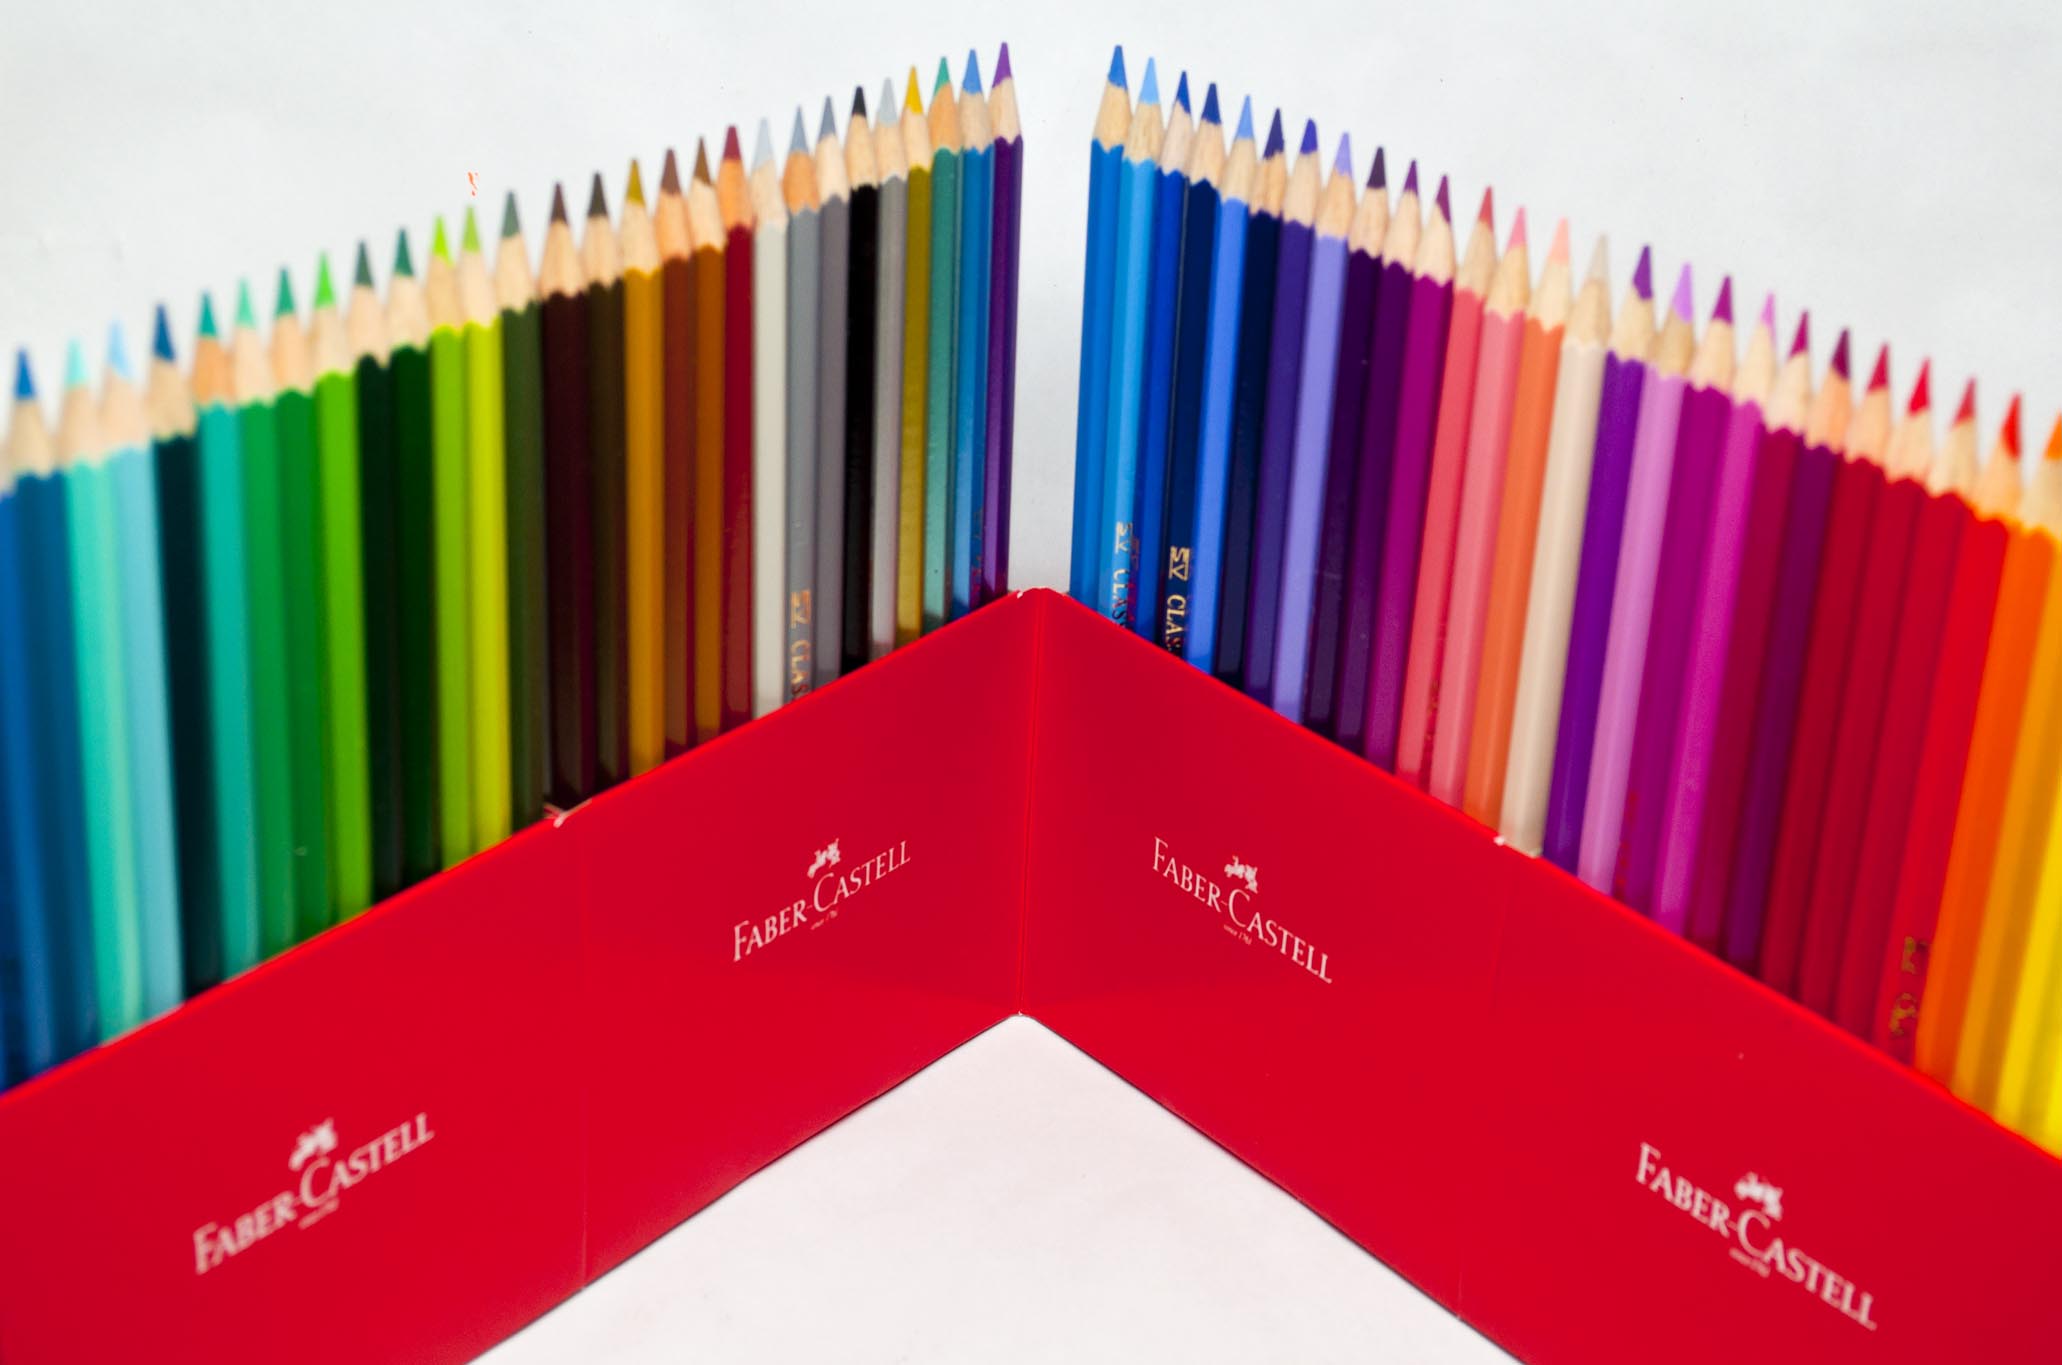 Faber-Castell Polychromos colored pencils 36 color set wooden box